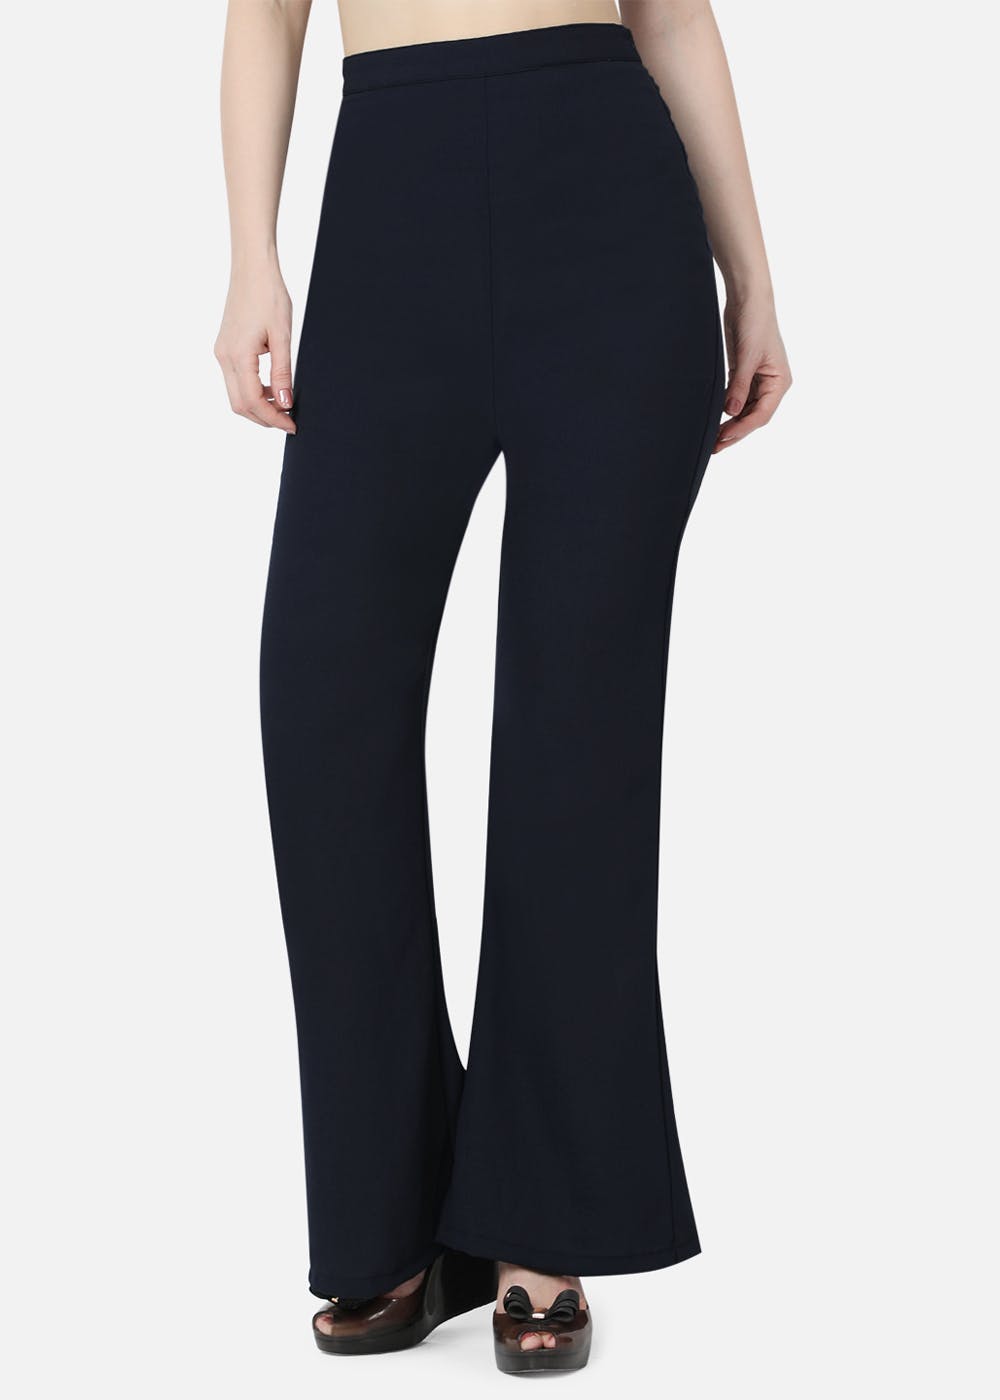 Womens High Waist Jeans Button Tassel Pants Trousers Bellbottom Pants  Blue S  Walmartcom